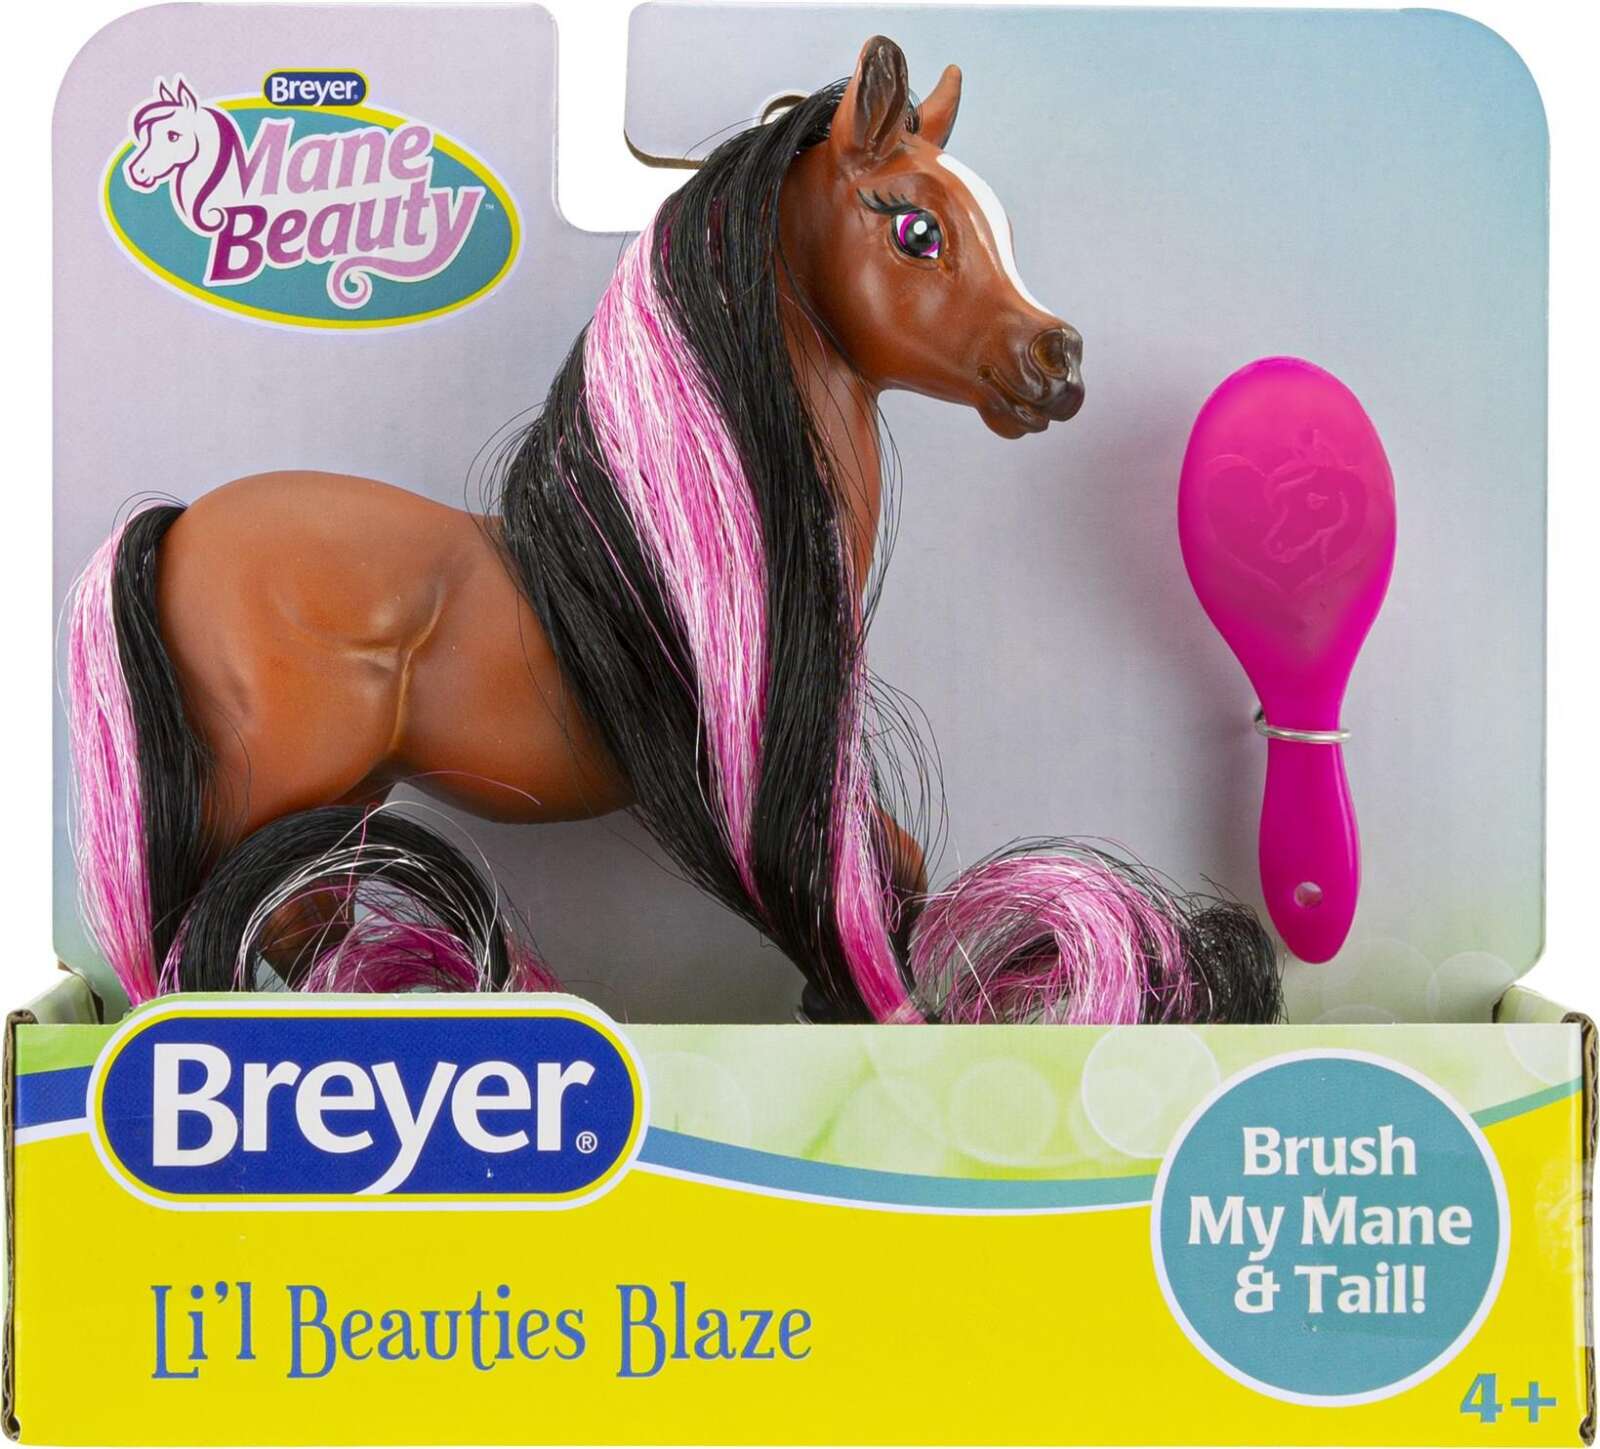 Breyer Mane Beauty Li’l Beauties Blaze